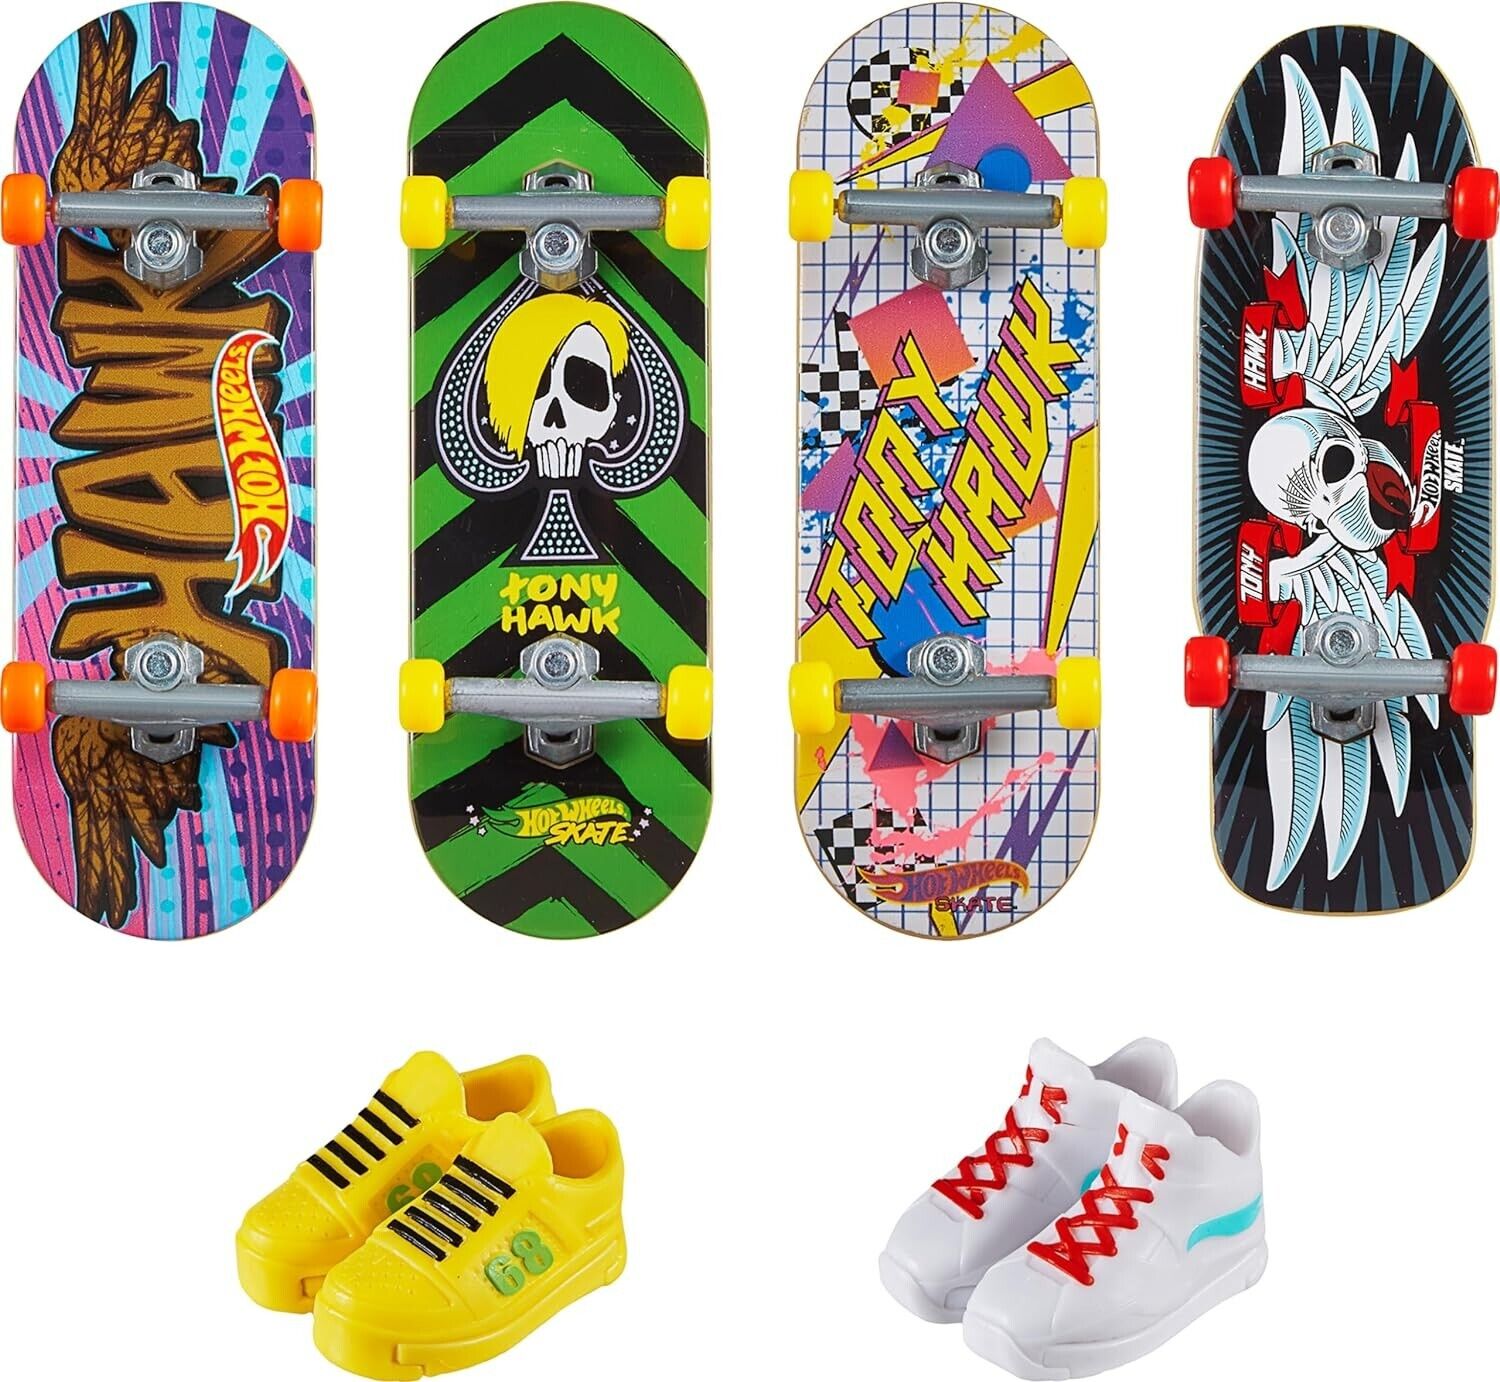 Mattel Hot Wheels Skate 4-Pack - Half Pipe Pack Skate Fingerboard Action Toy New